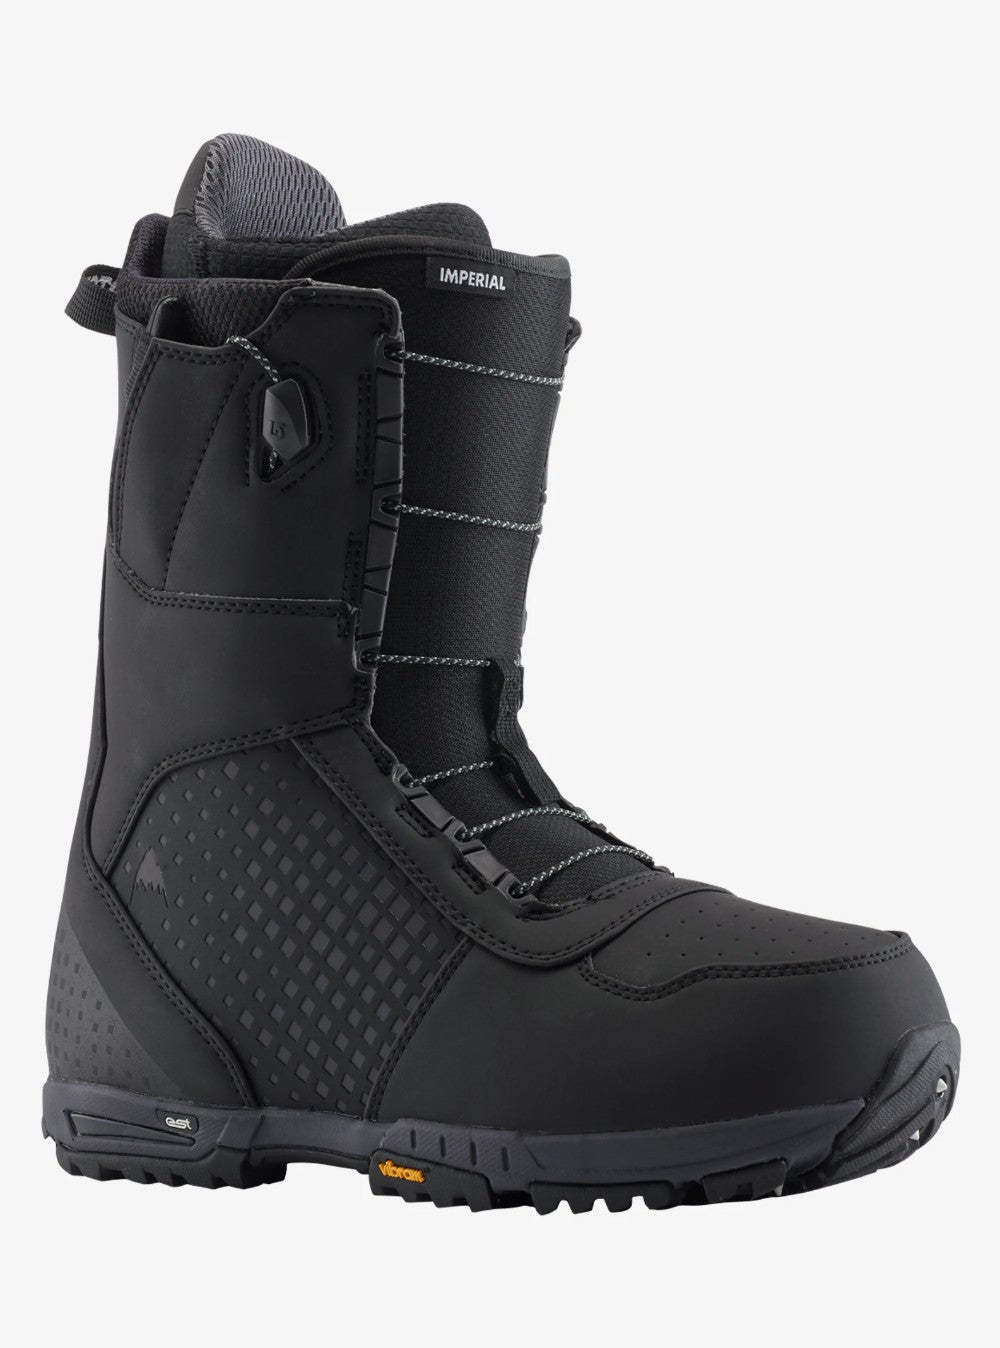 Burton Imperial Snowboard Boots 2019